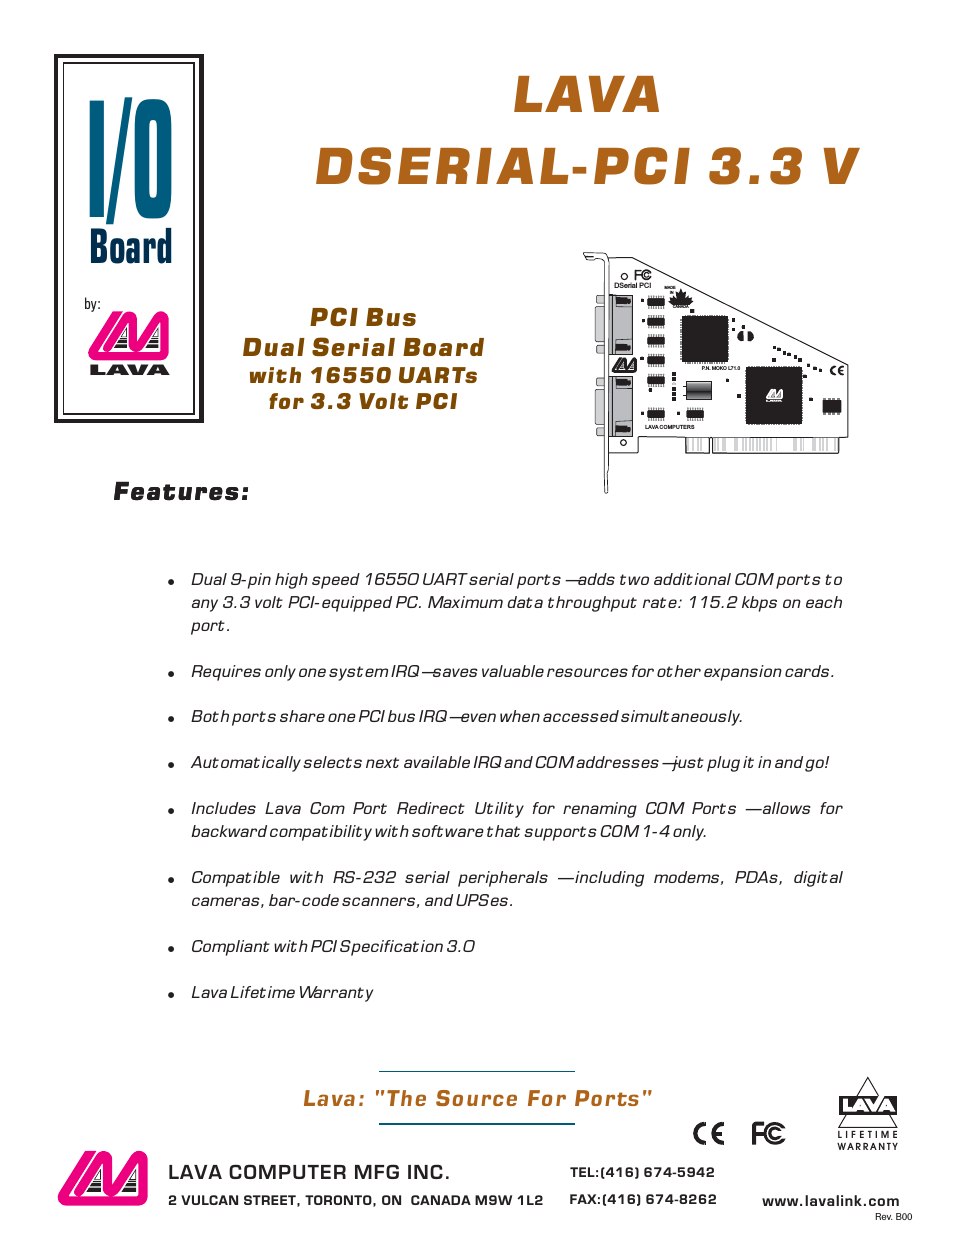 DSERIAL-PCI 3.3 V